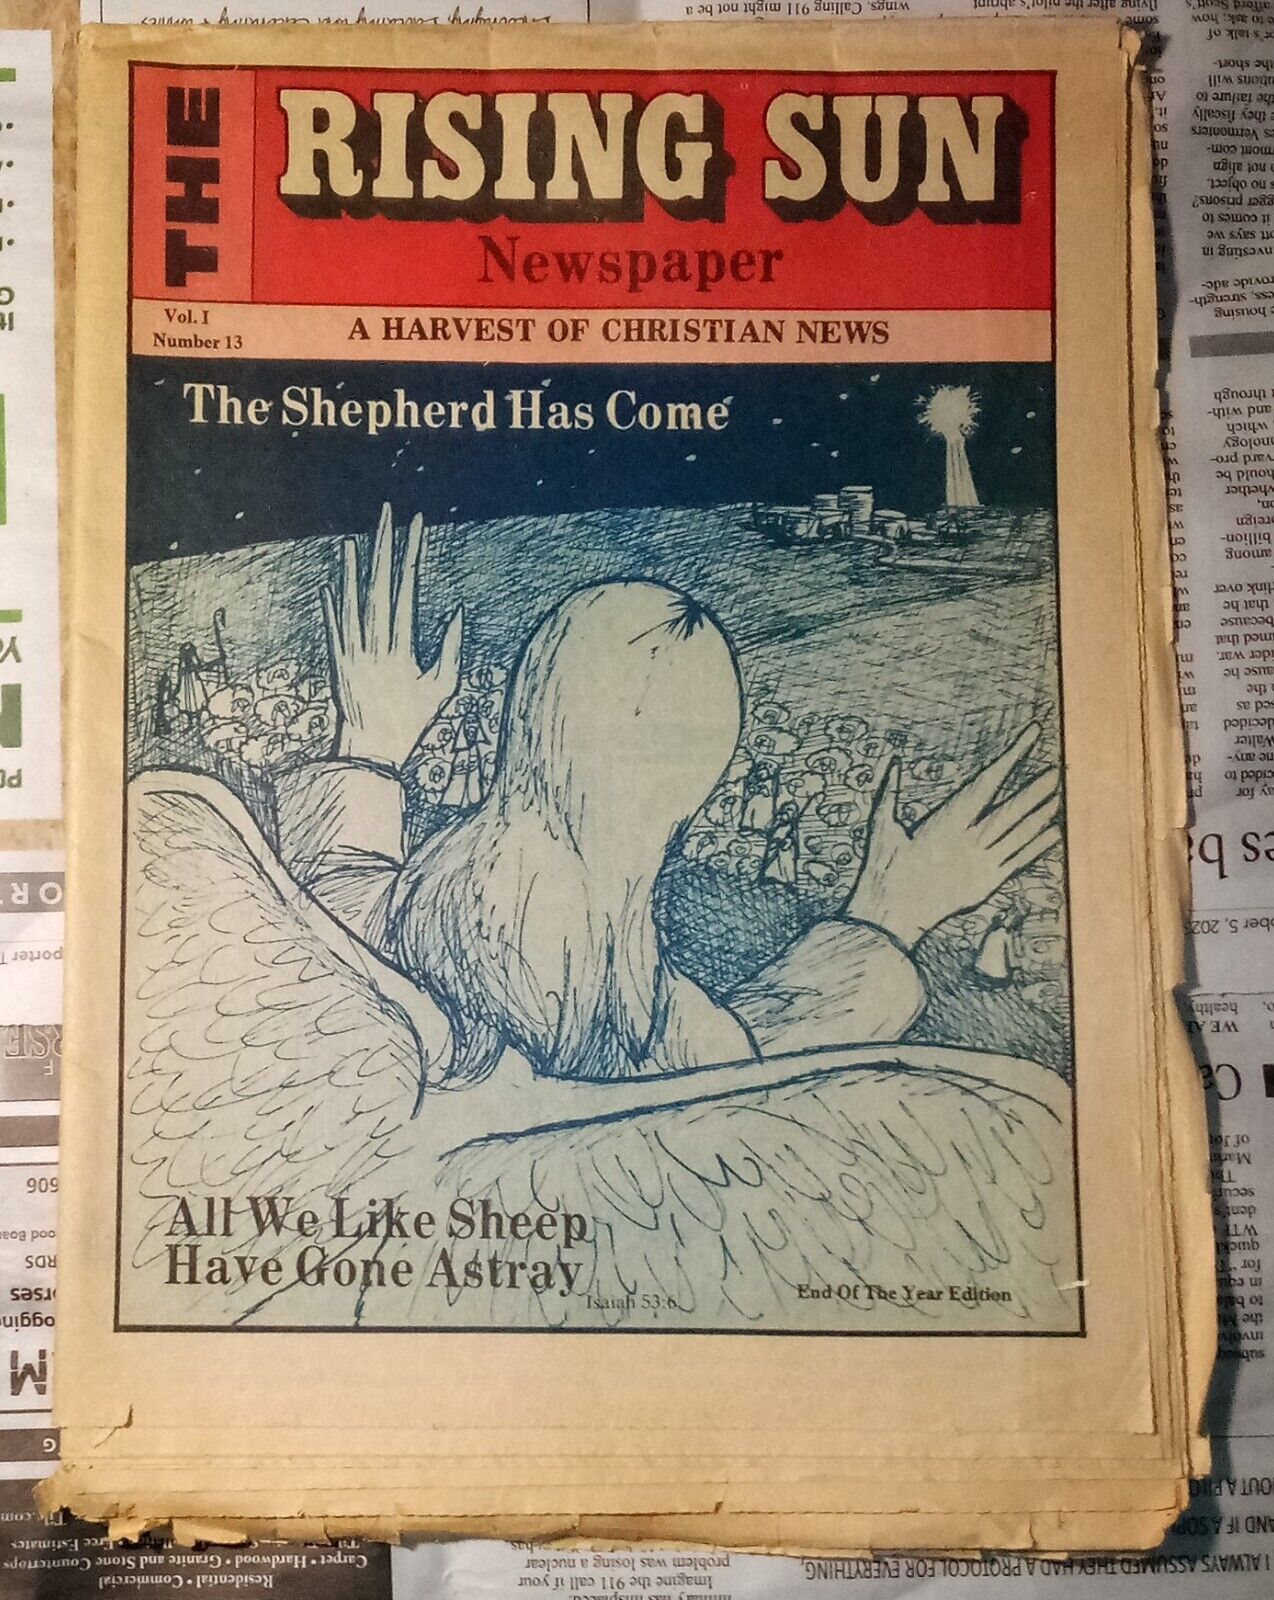 The Rising Sun Newspaper - A Harvest of Christian News c. 1980s